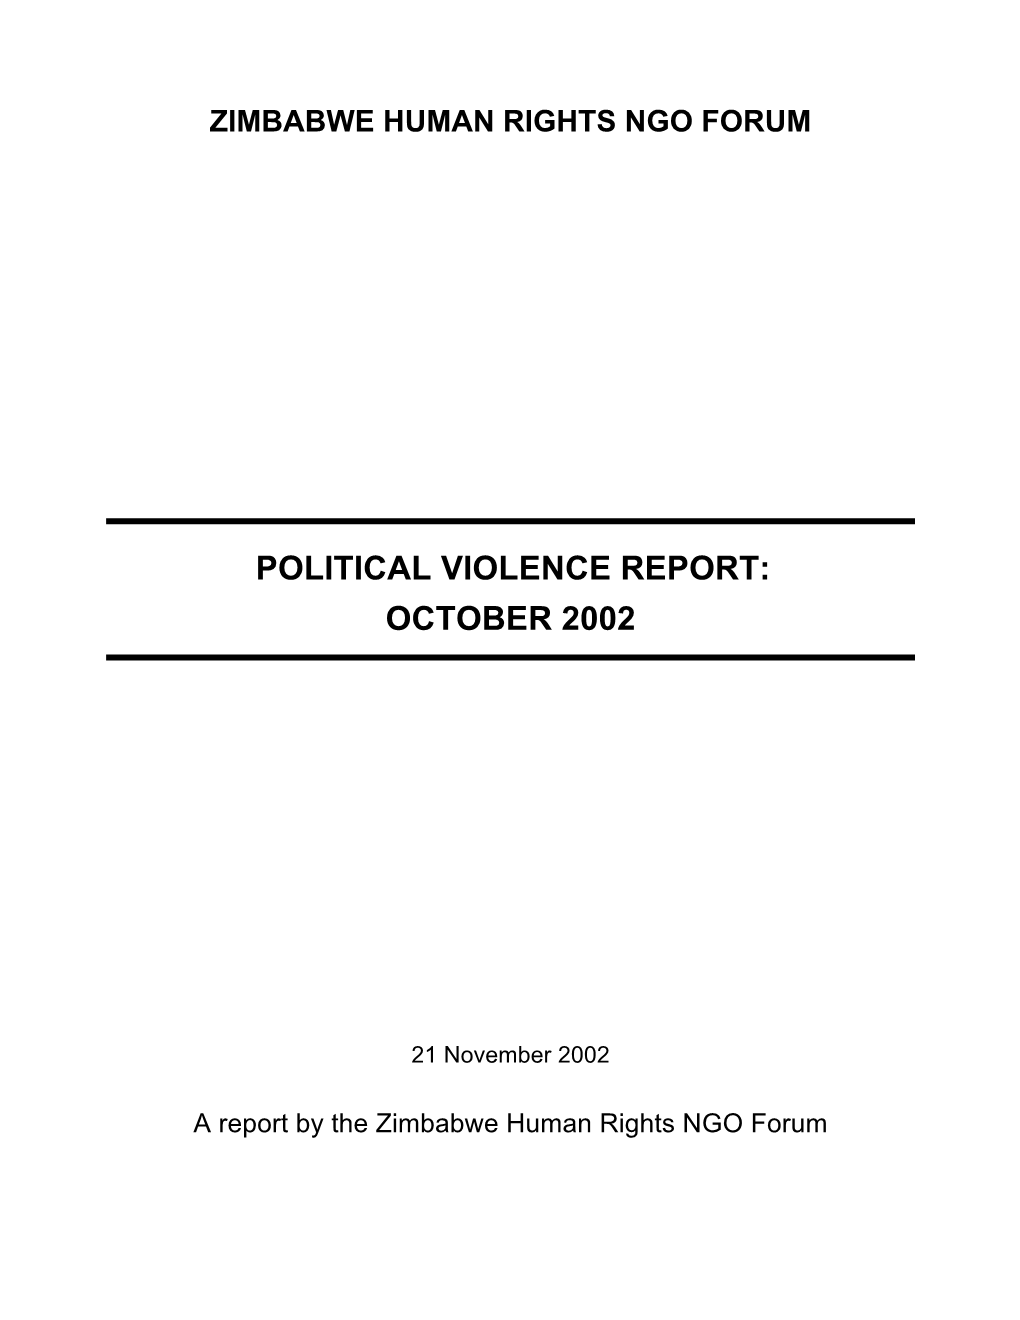 Political Violence Report: October 2002